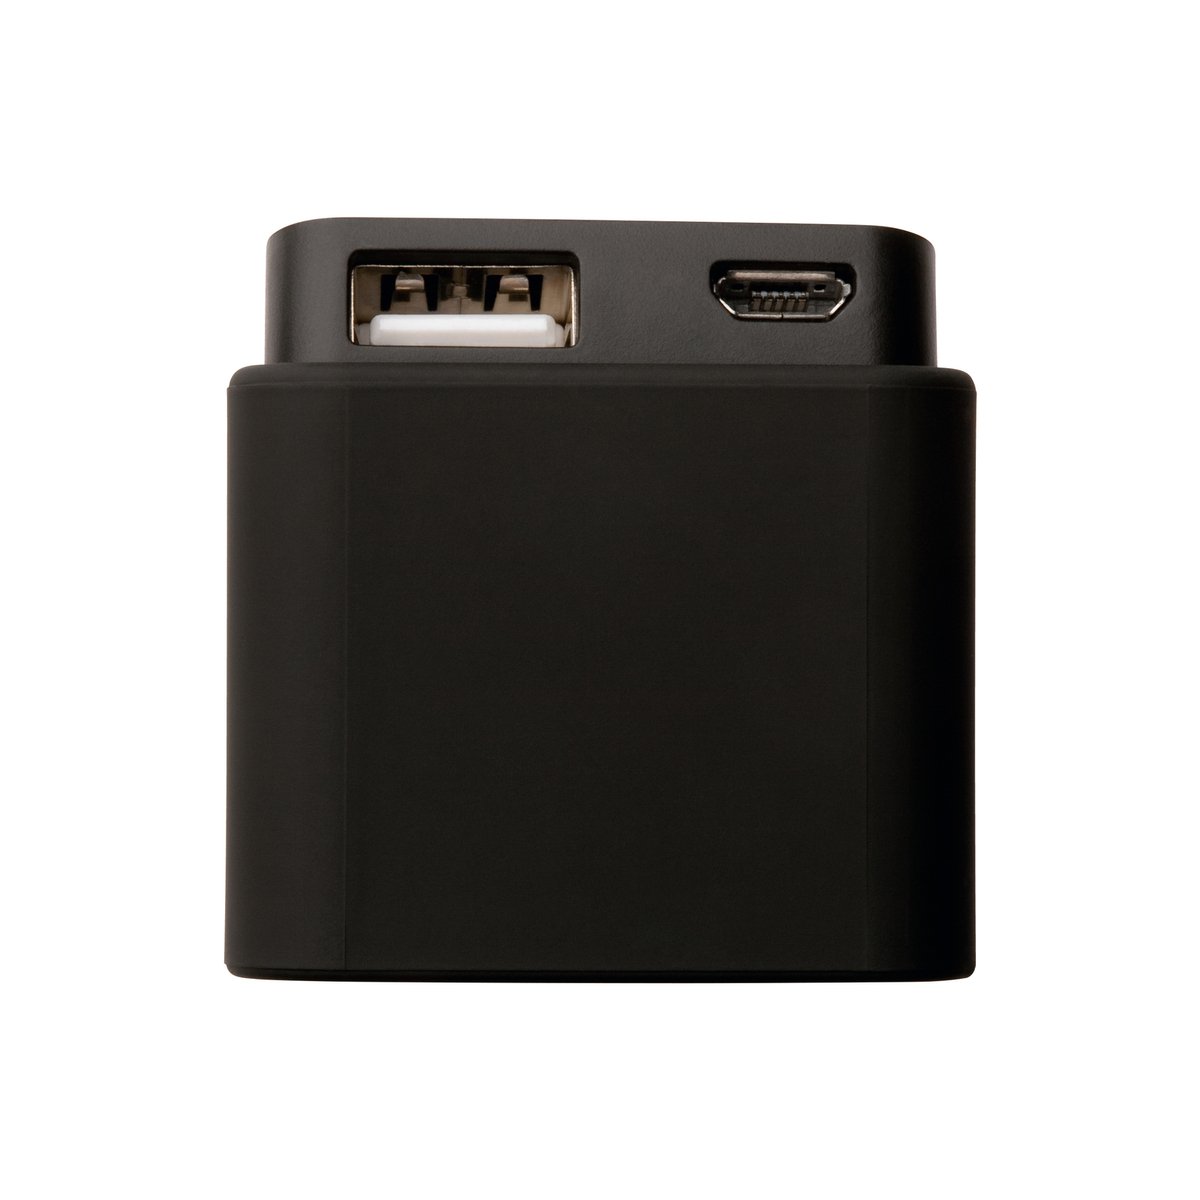 Accumulateur USB REEVES-YANGON 4400 mAh